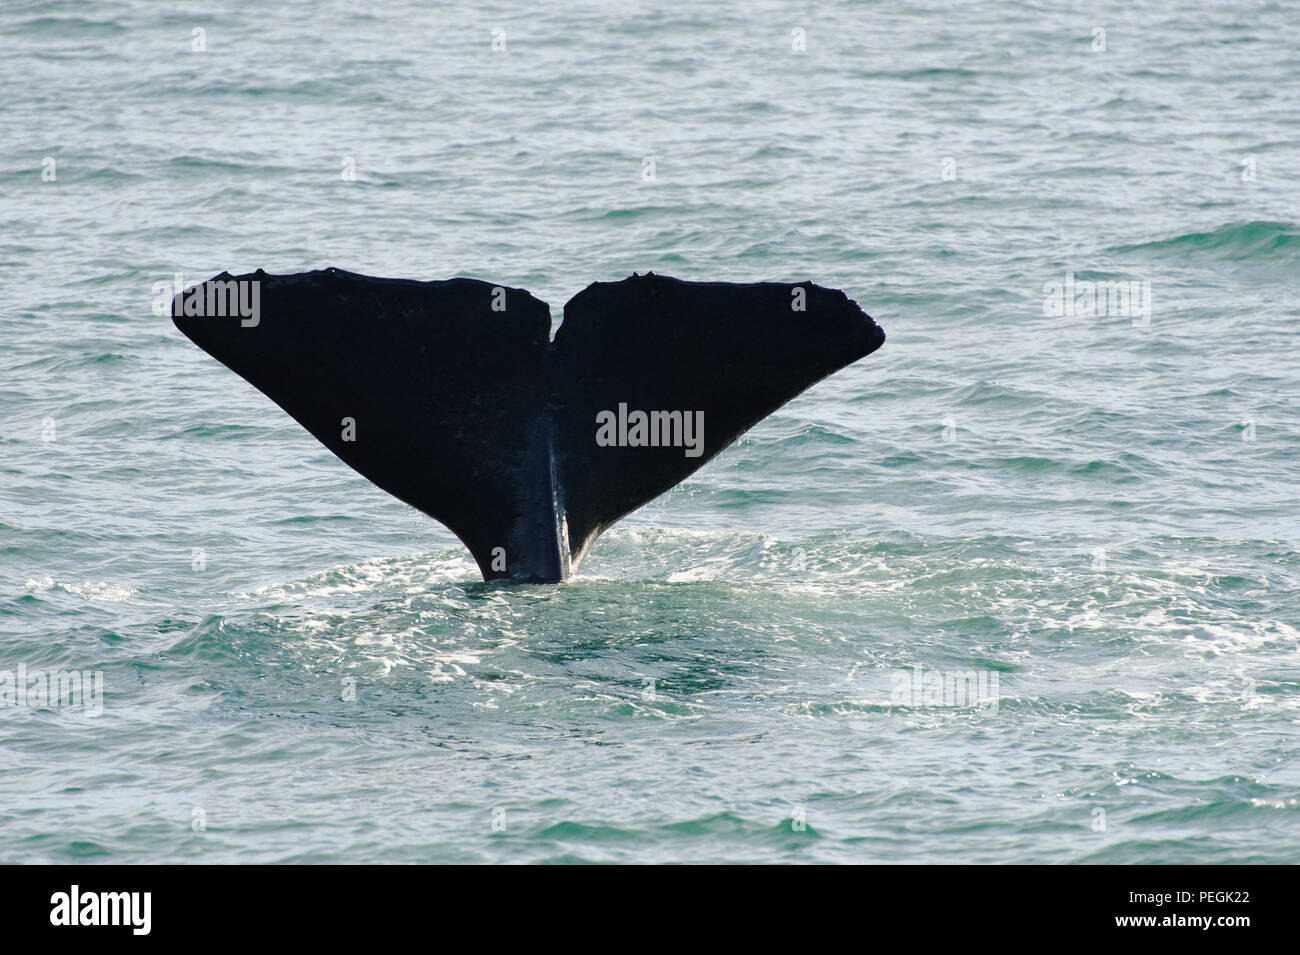 Sperm whale diving, Kaikoura Coast, South Island, New Zealand Stock Photo